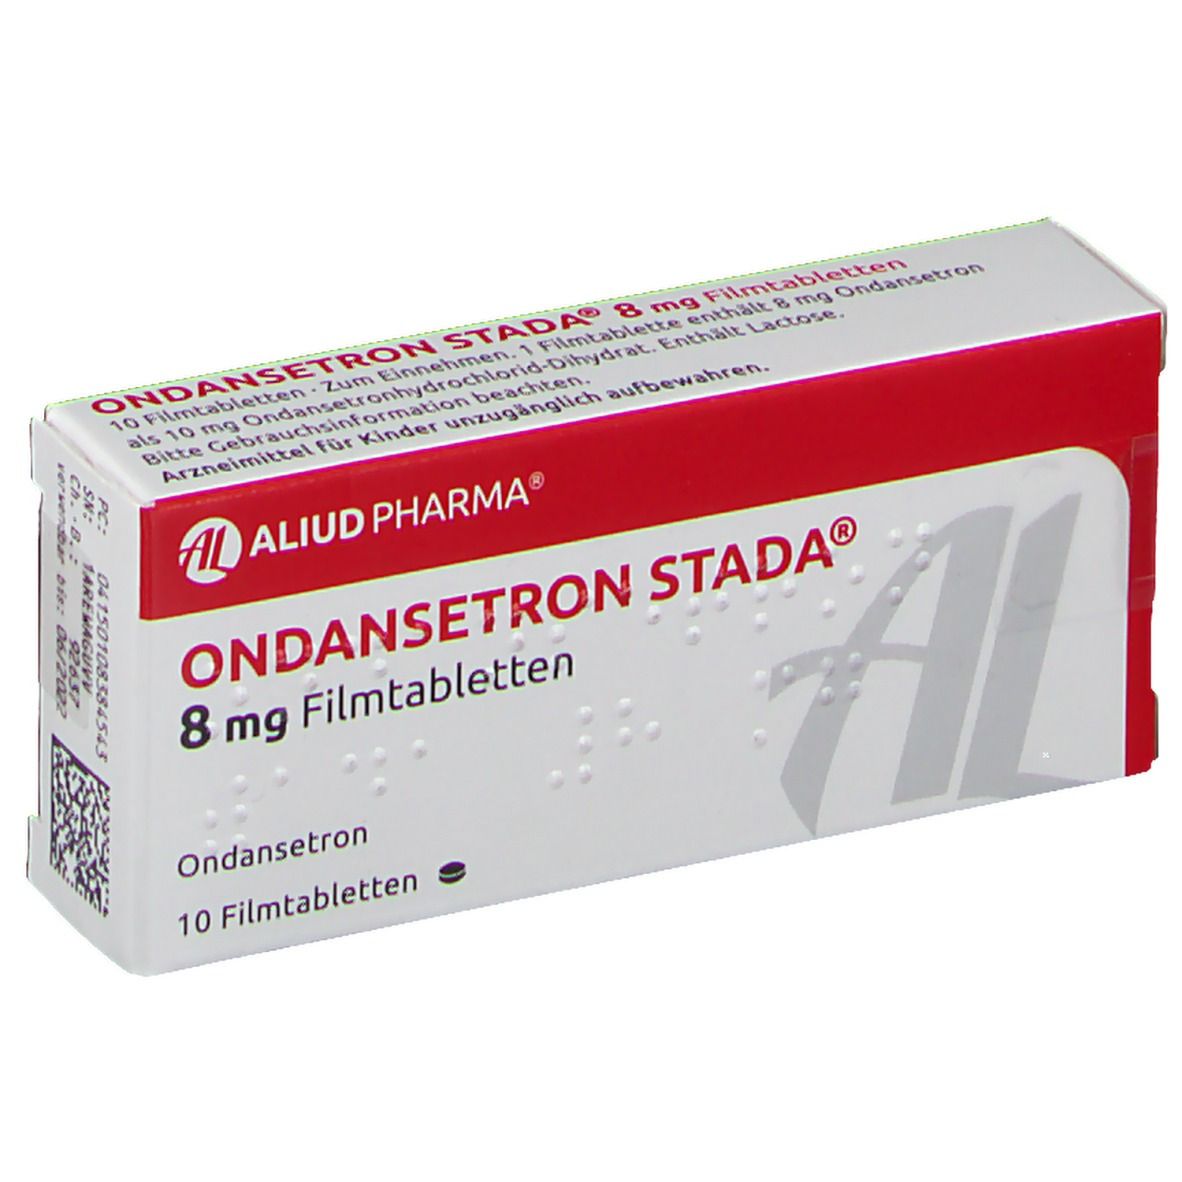 Ondansetron STADA® 8 mg